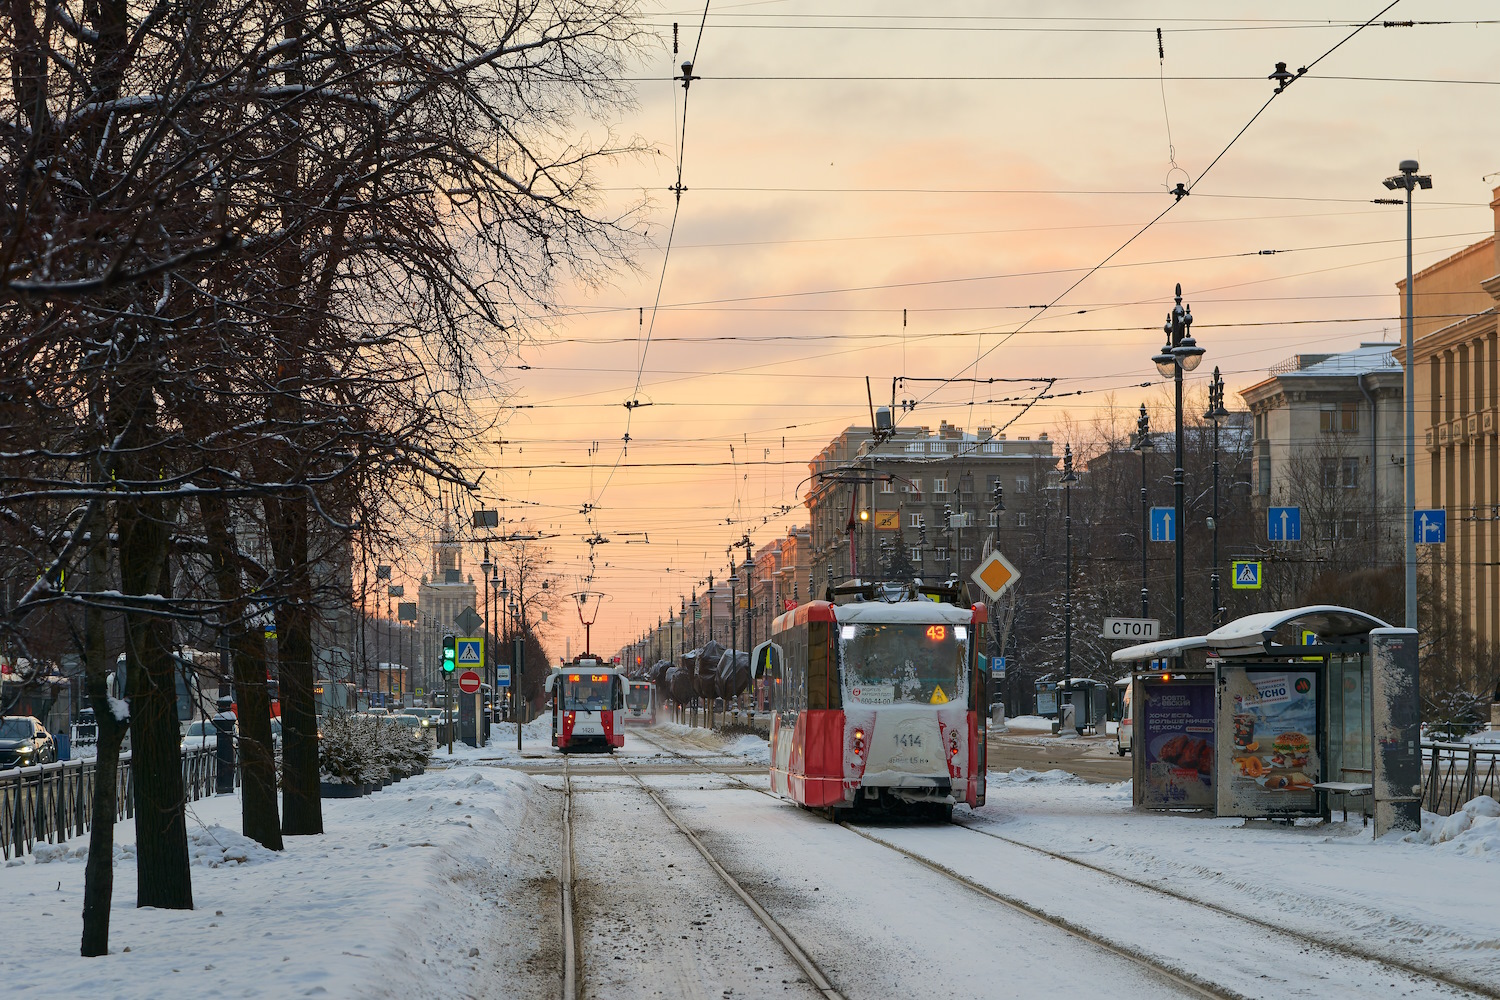 Saint-Petersburg, 71-153 (LM-2008) № 1414; Saint-Petersburg — Tram lines and infrastructure